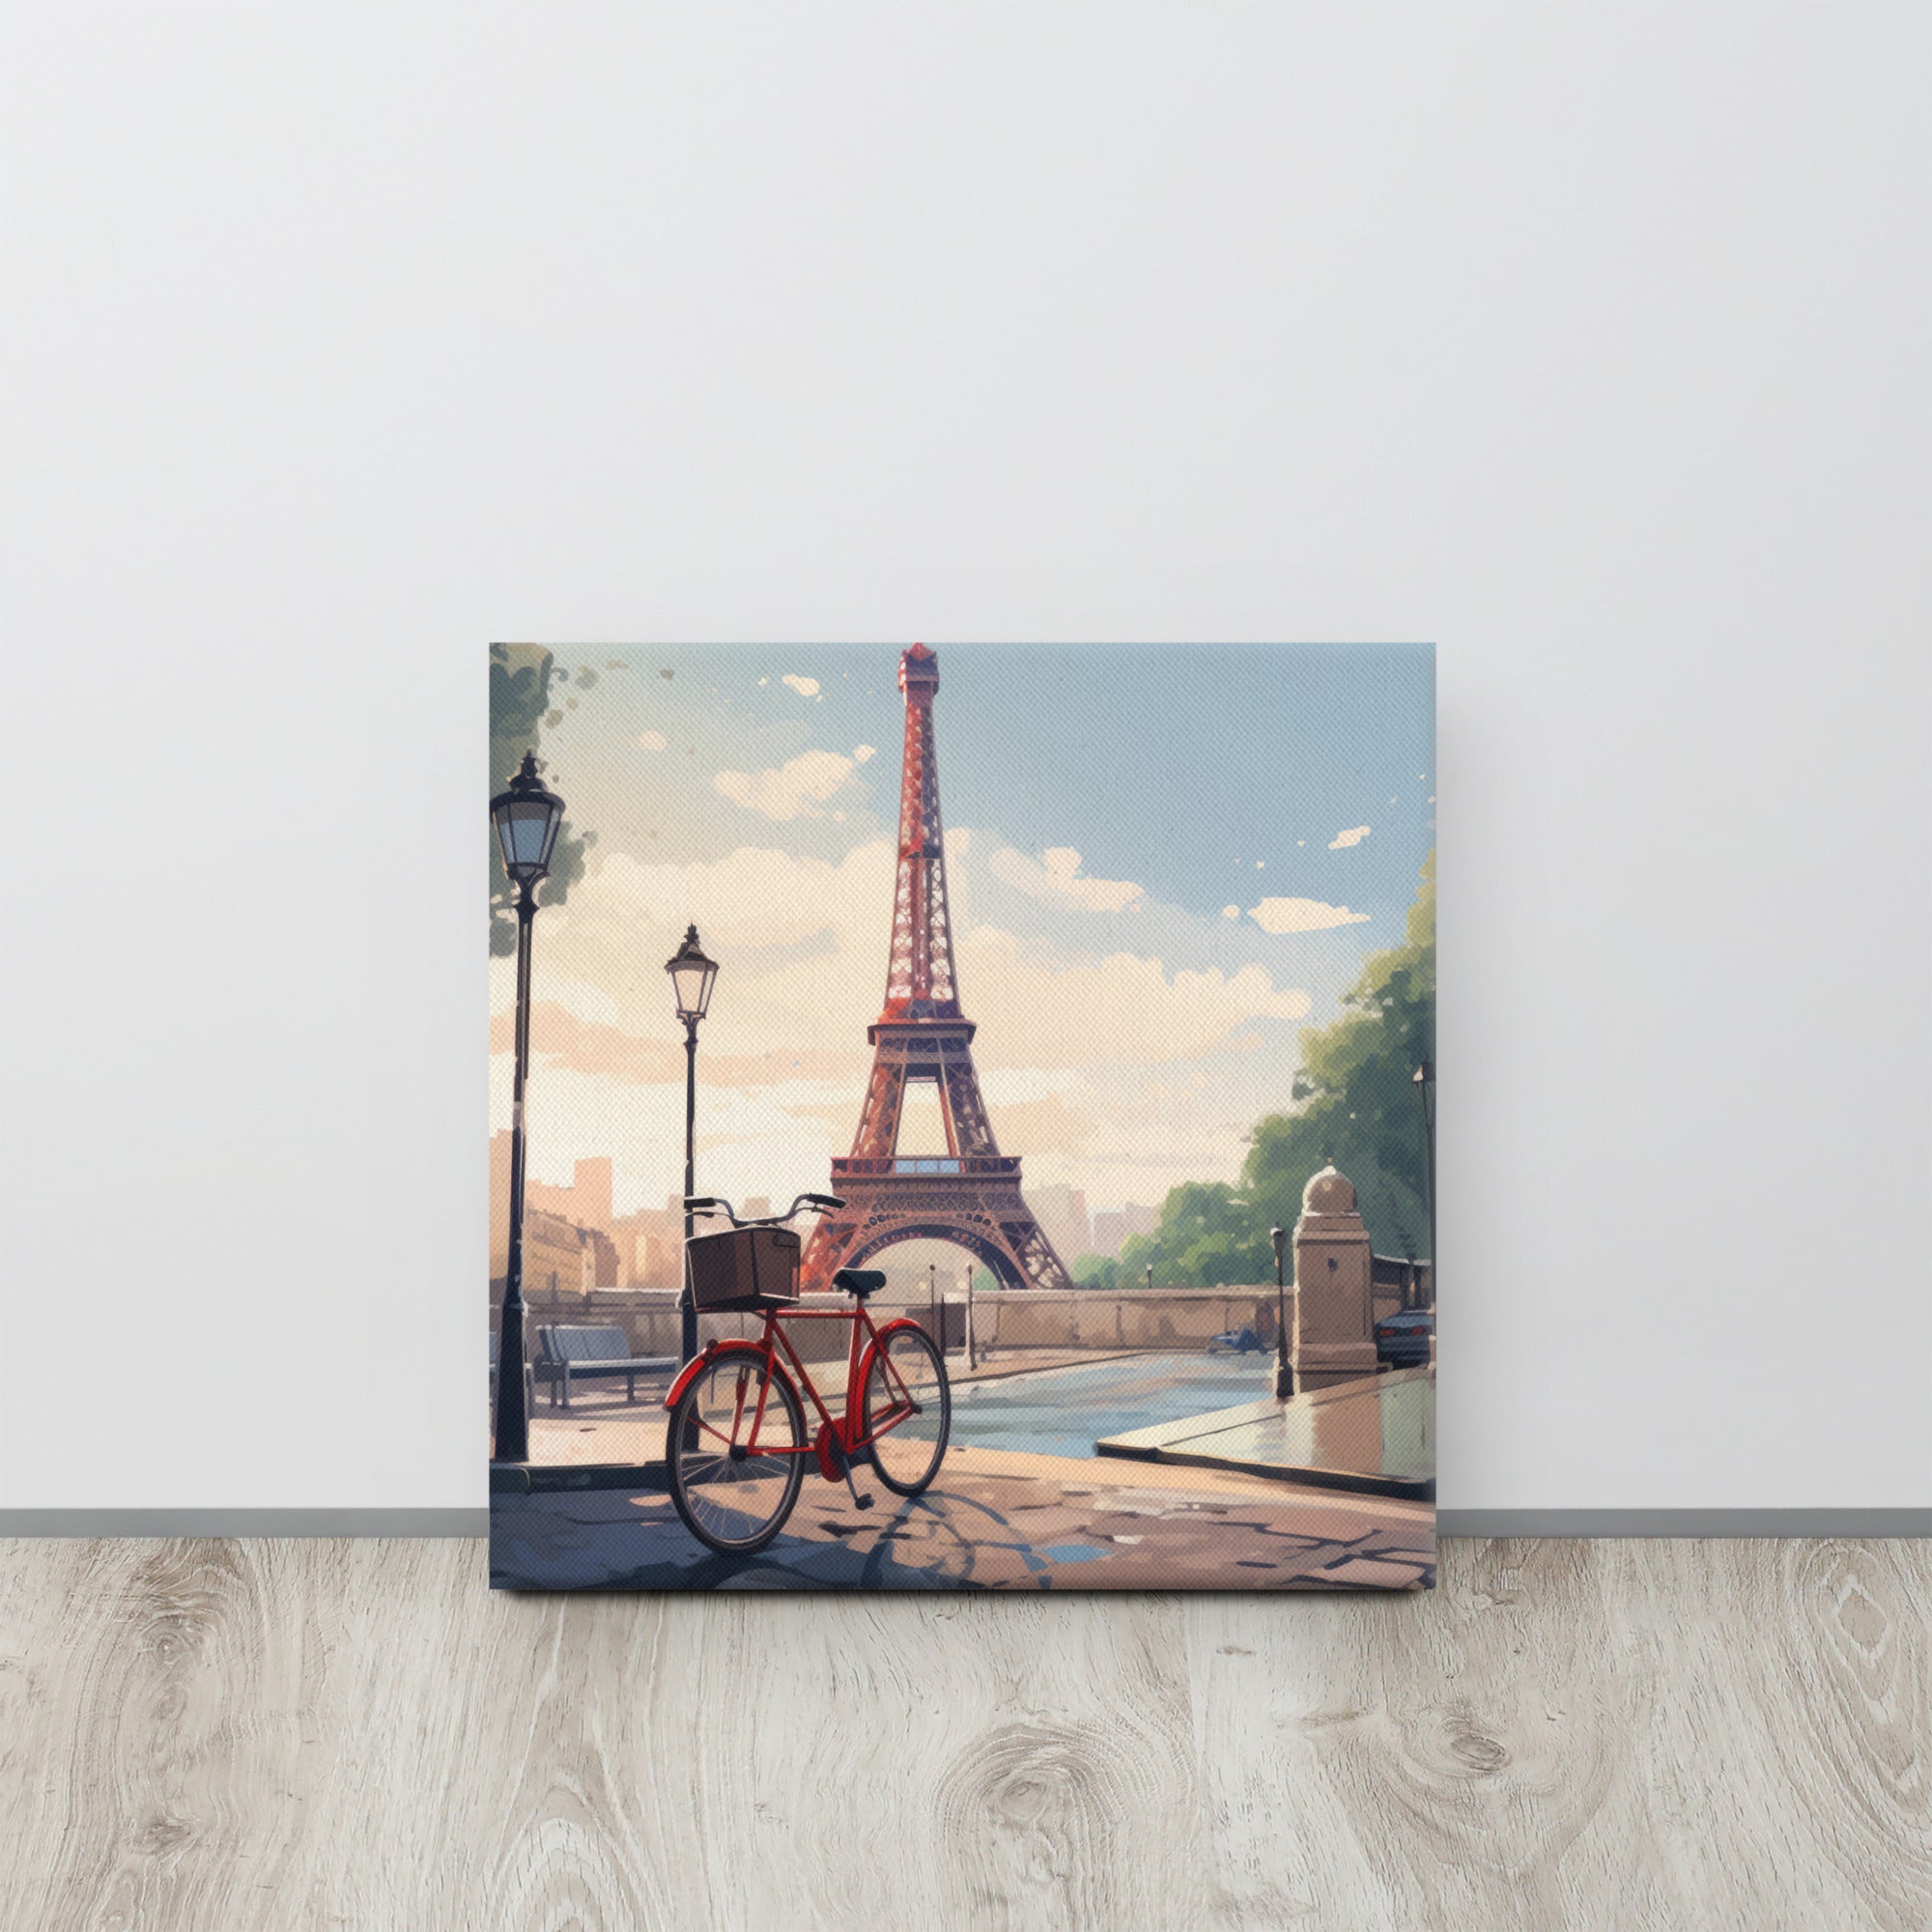 Parisian Serenity: A Gentle Pause Beneath the Eiffel Tower Canvas Print